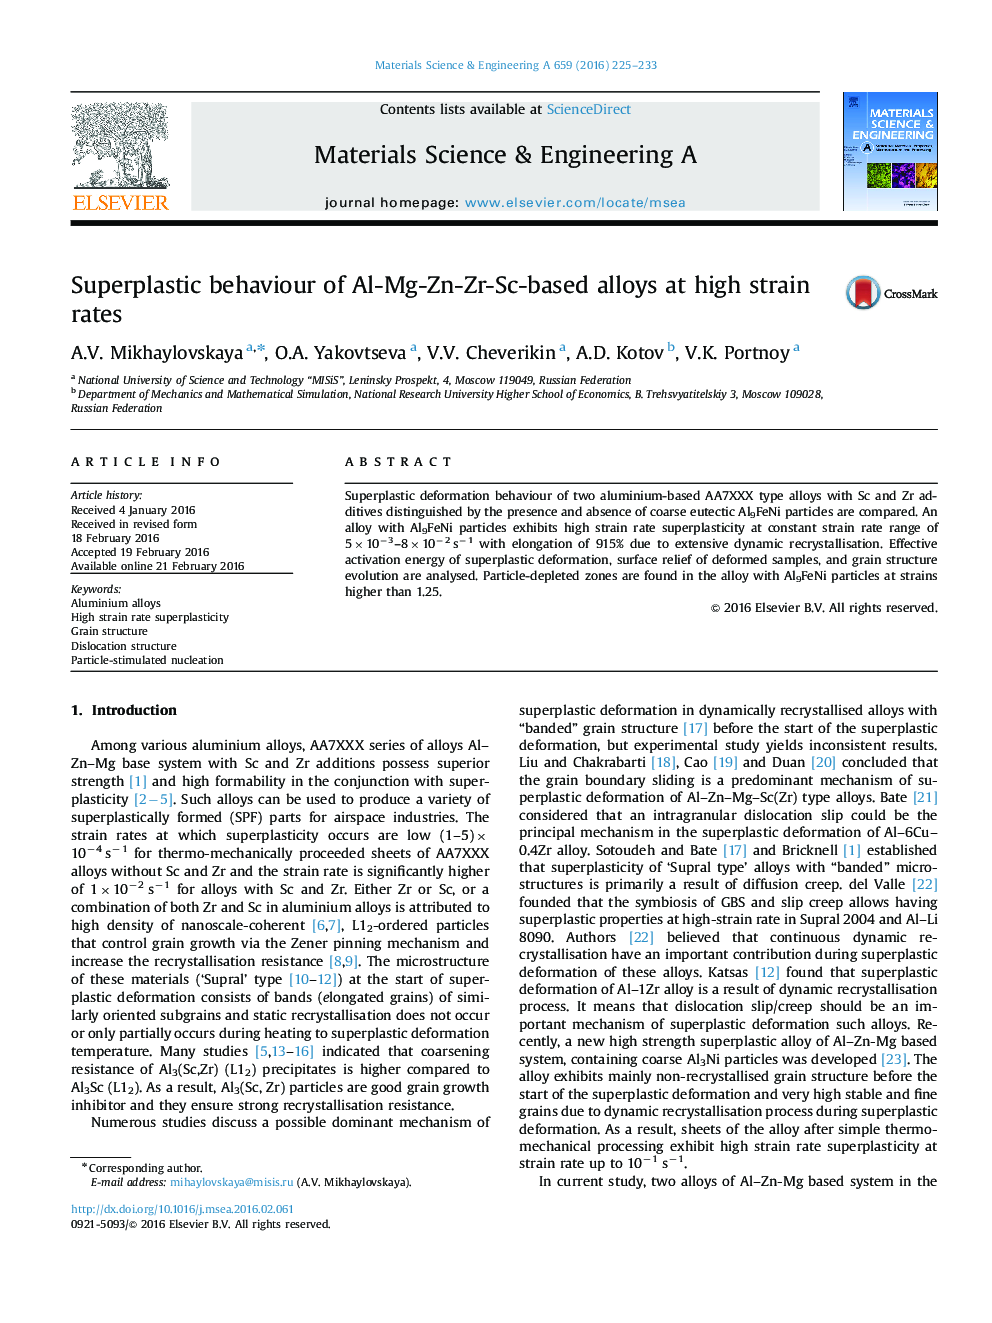 Superplastic behaviour of Al-Mg-Zn-Zr-Sc-based alloys at high strain rates